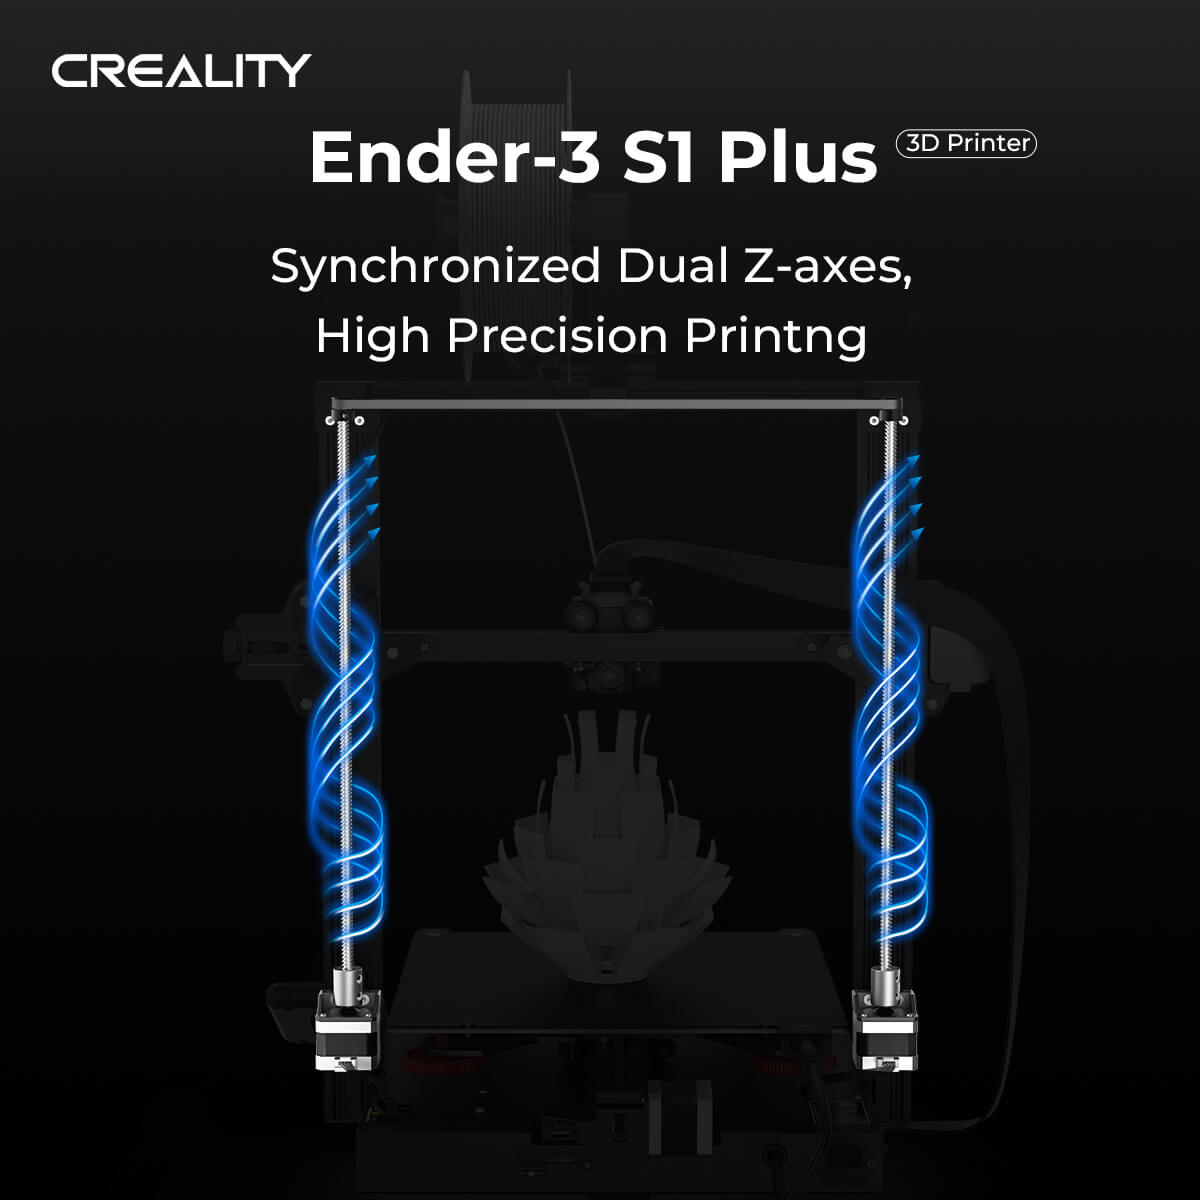 creality ender 3 s1 plus 3d printer